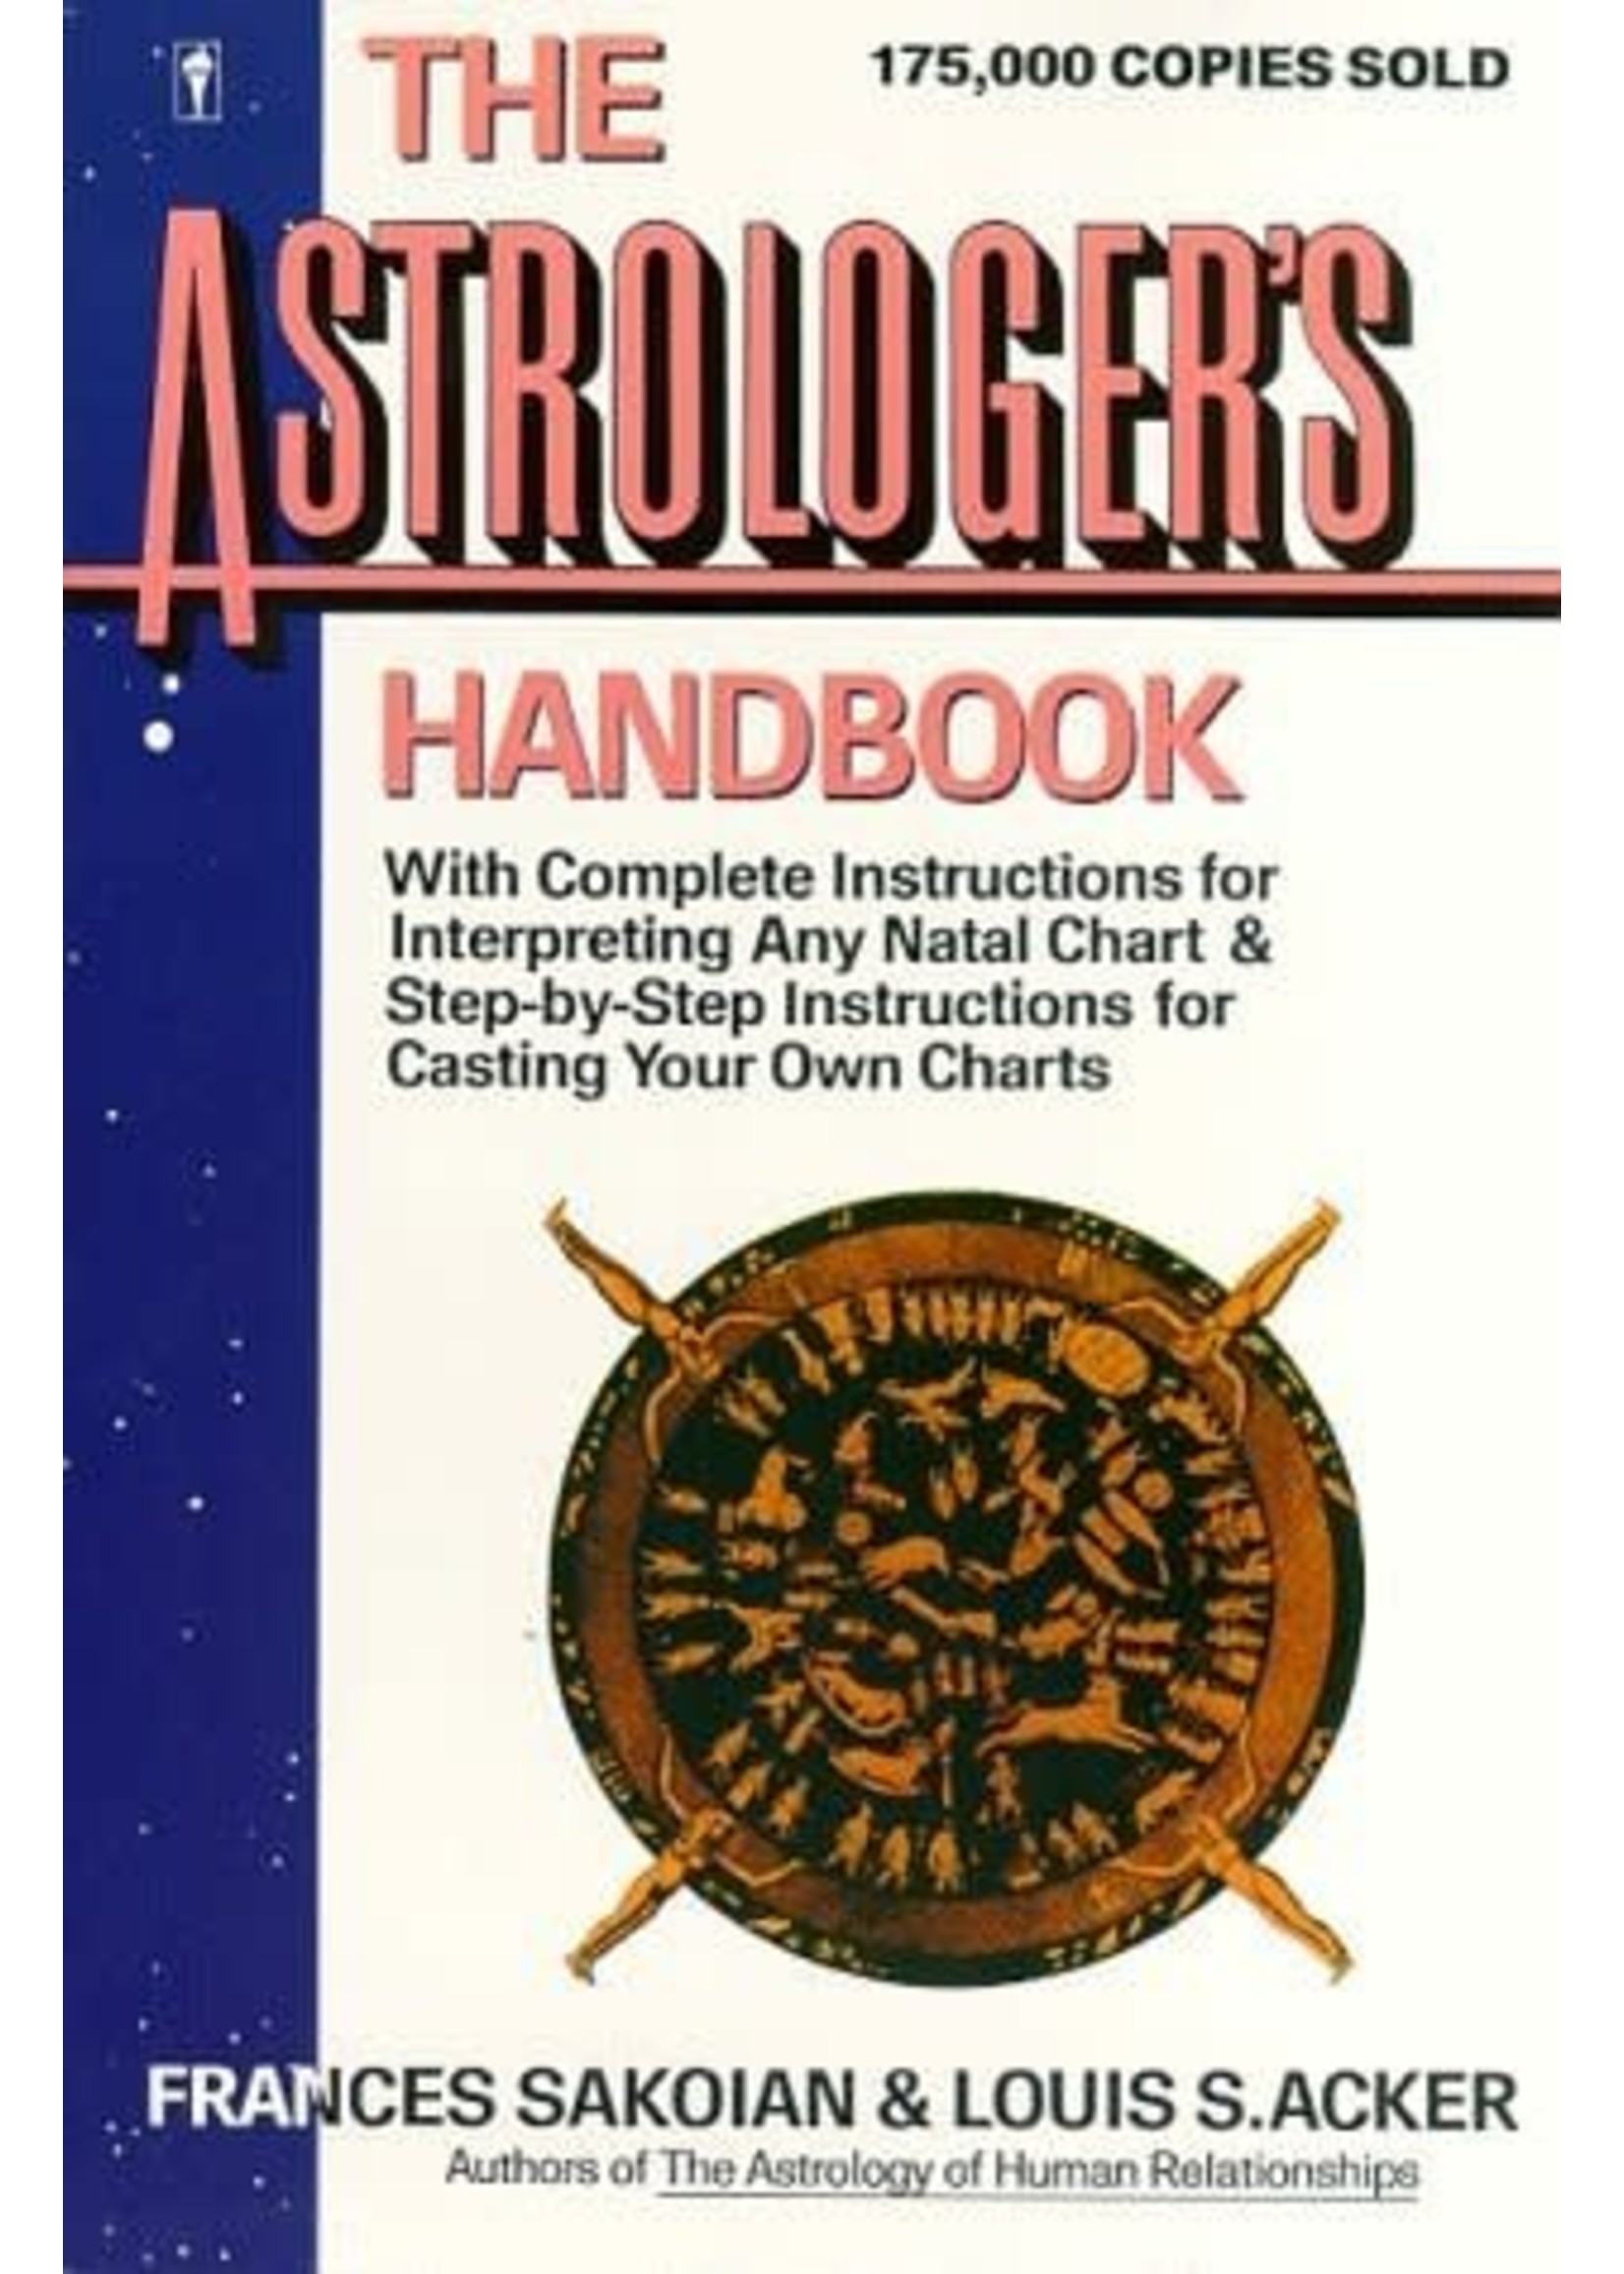 The Astrologer's Handbook by Frances Sakoian,  Louis S. Acker